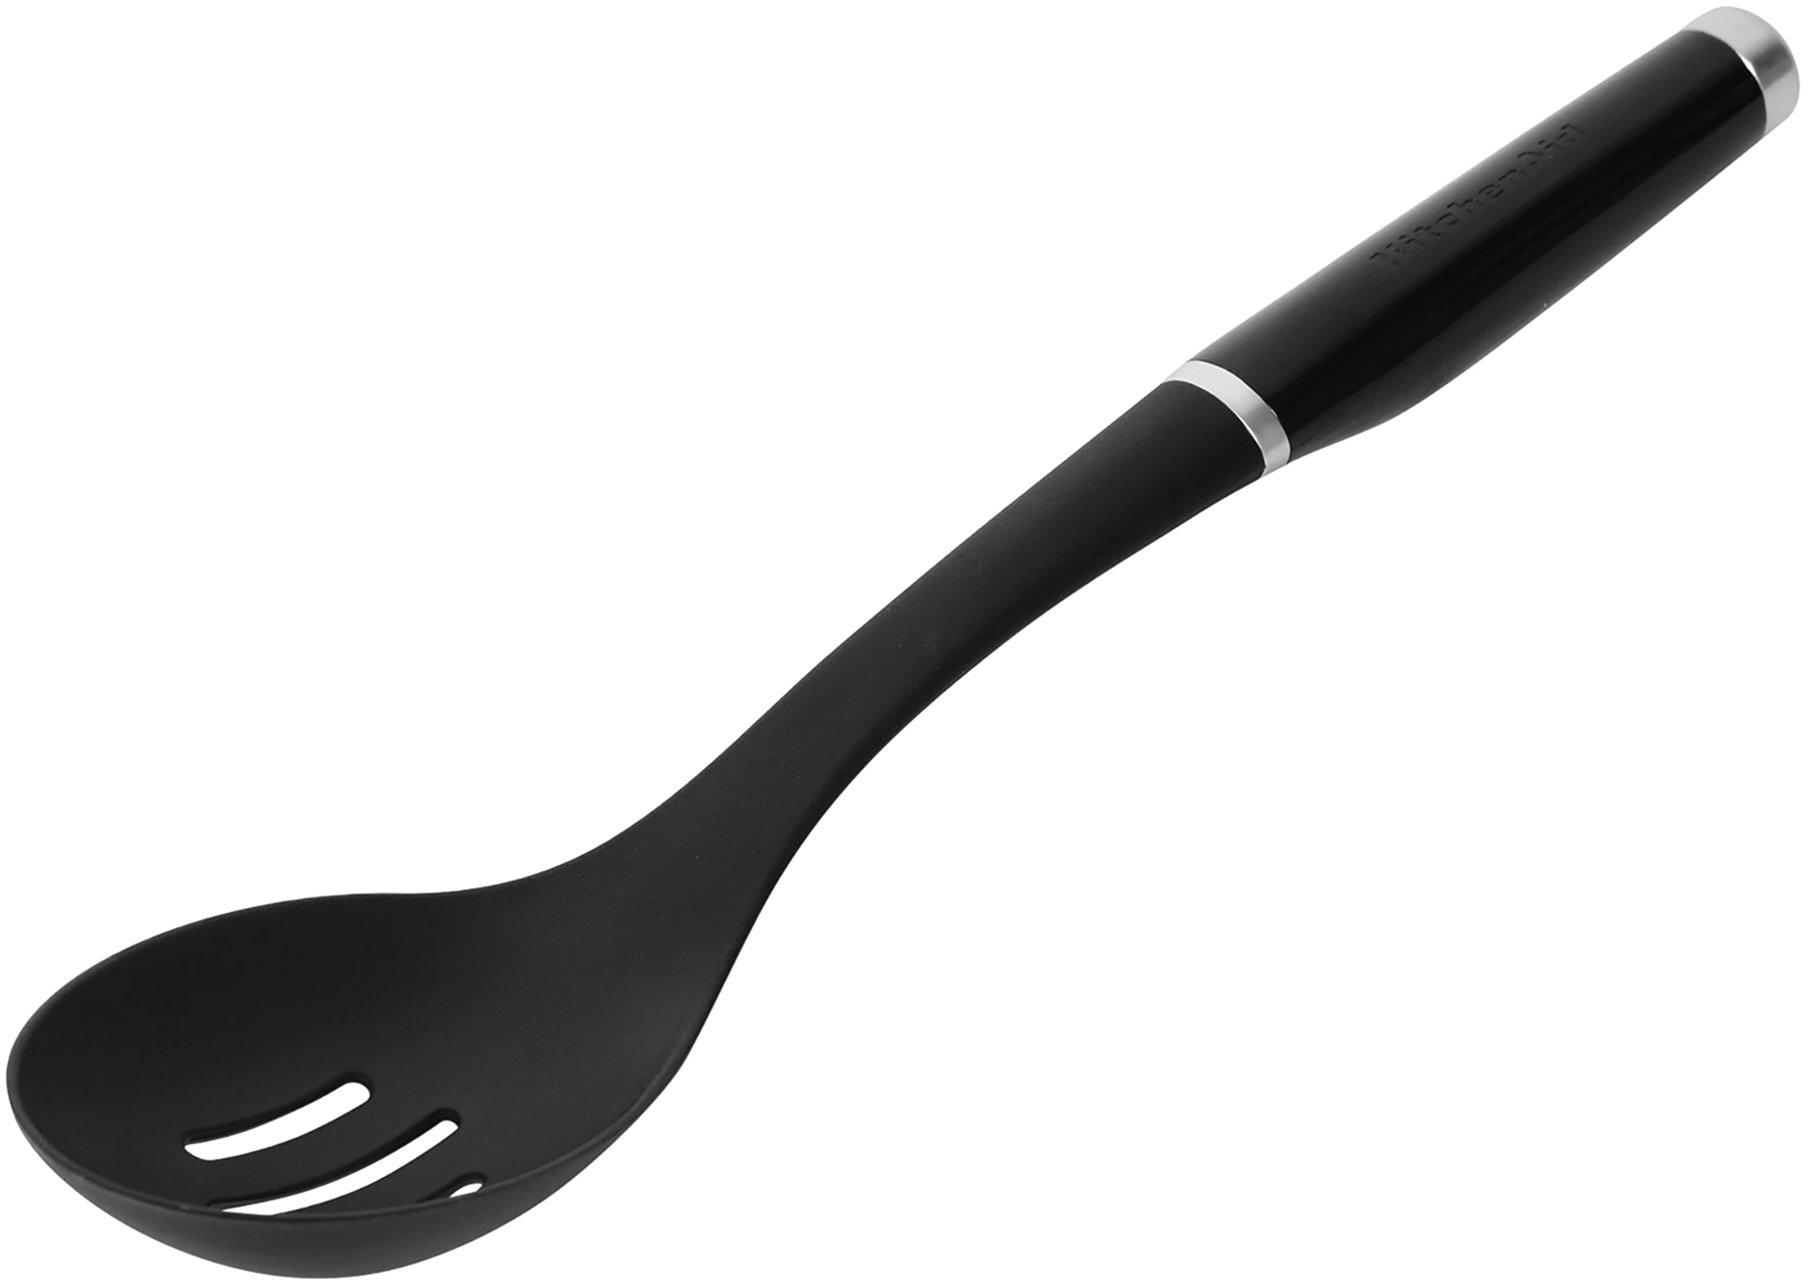 KitchenAid Classic Slotted Spoon